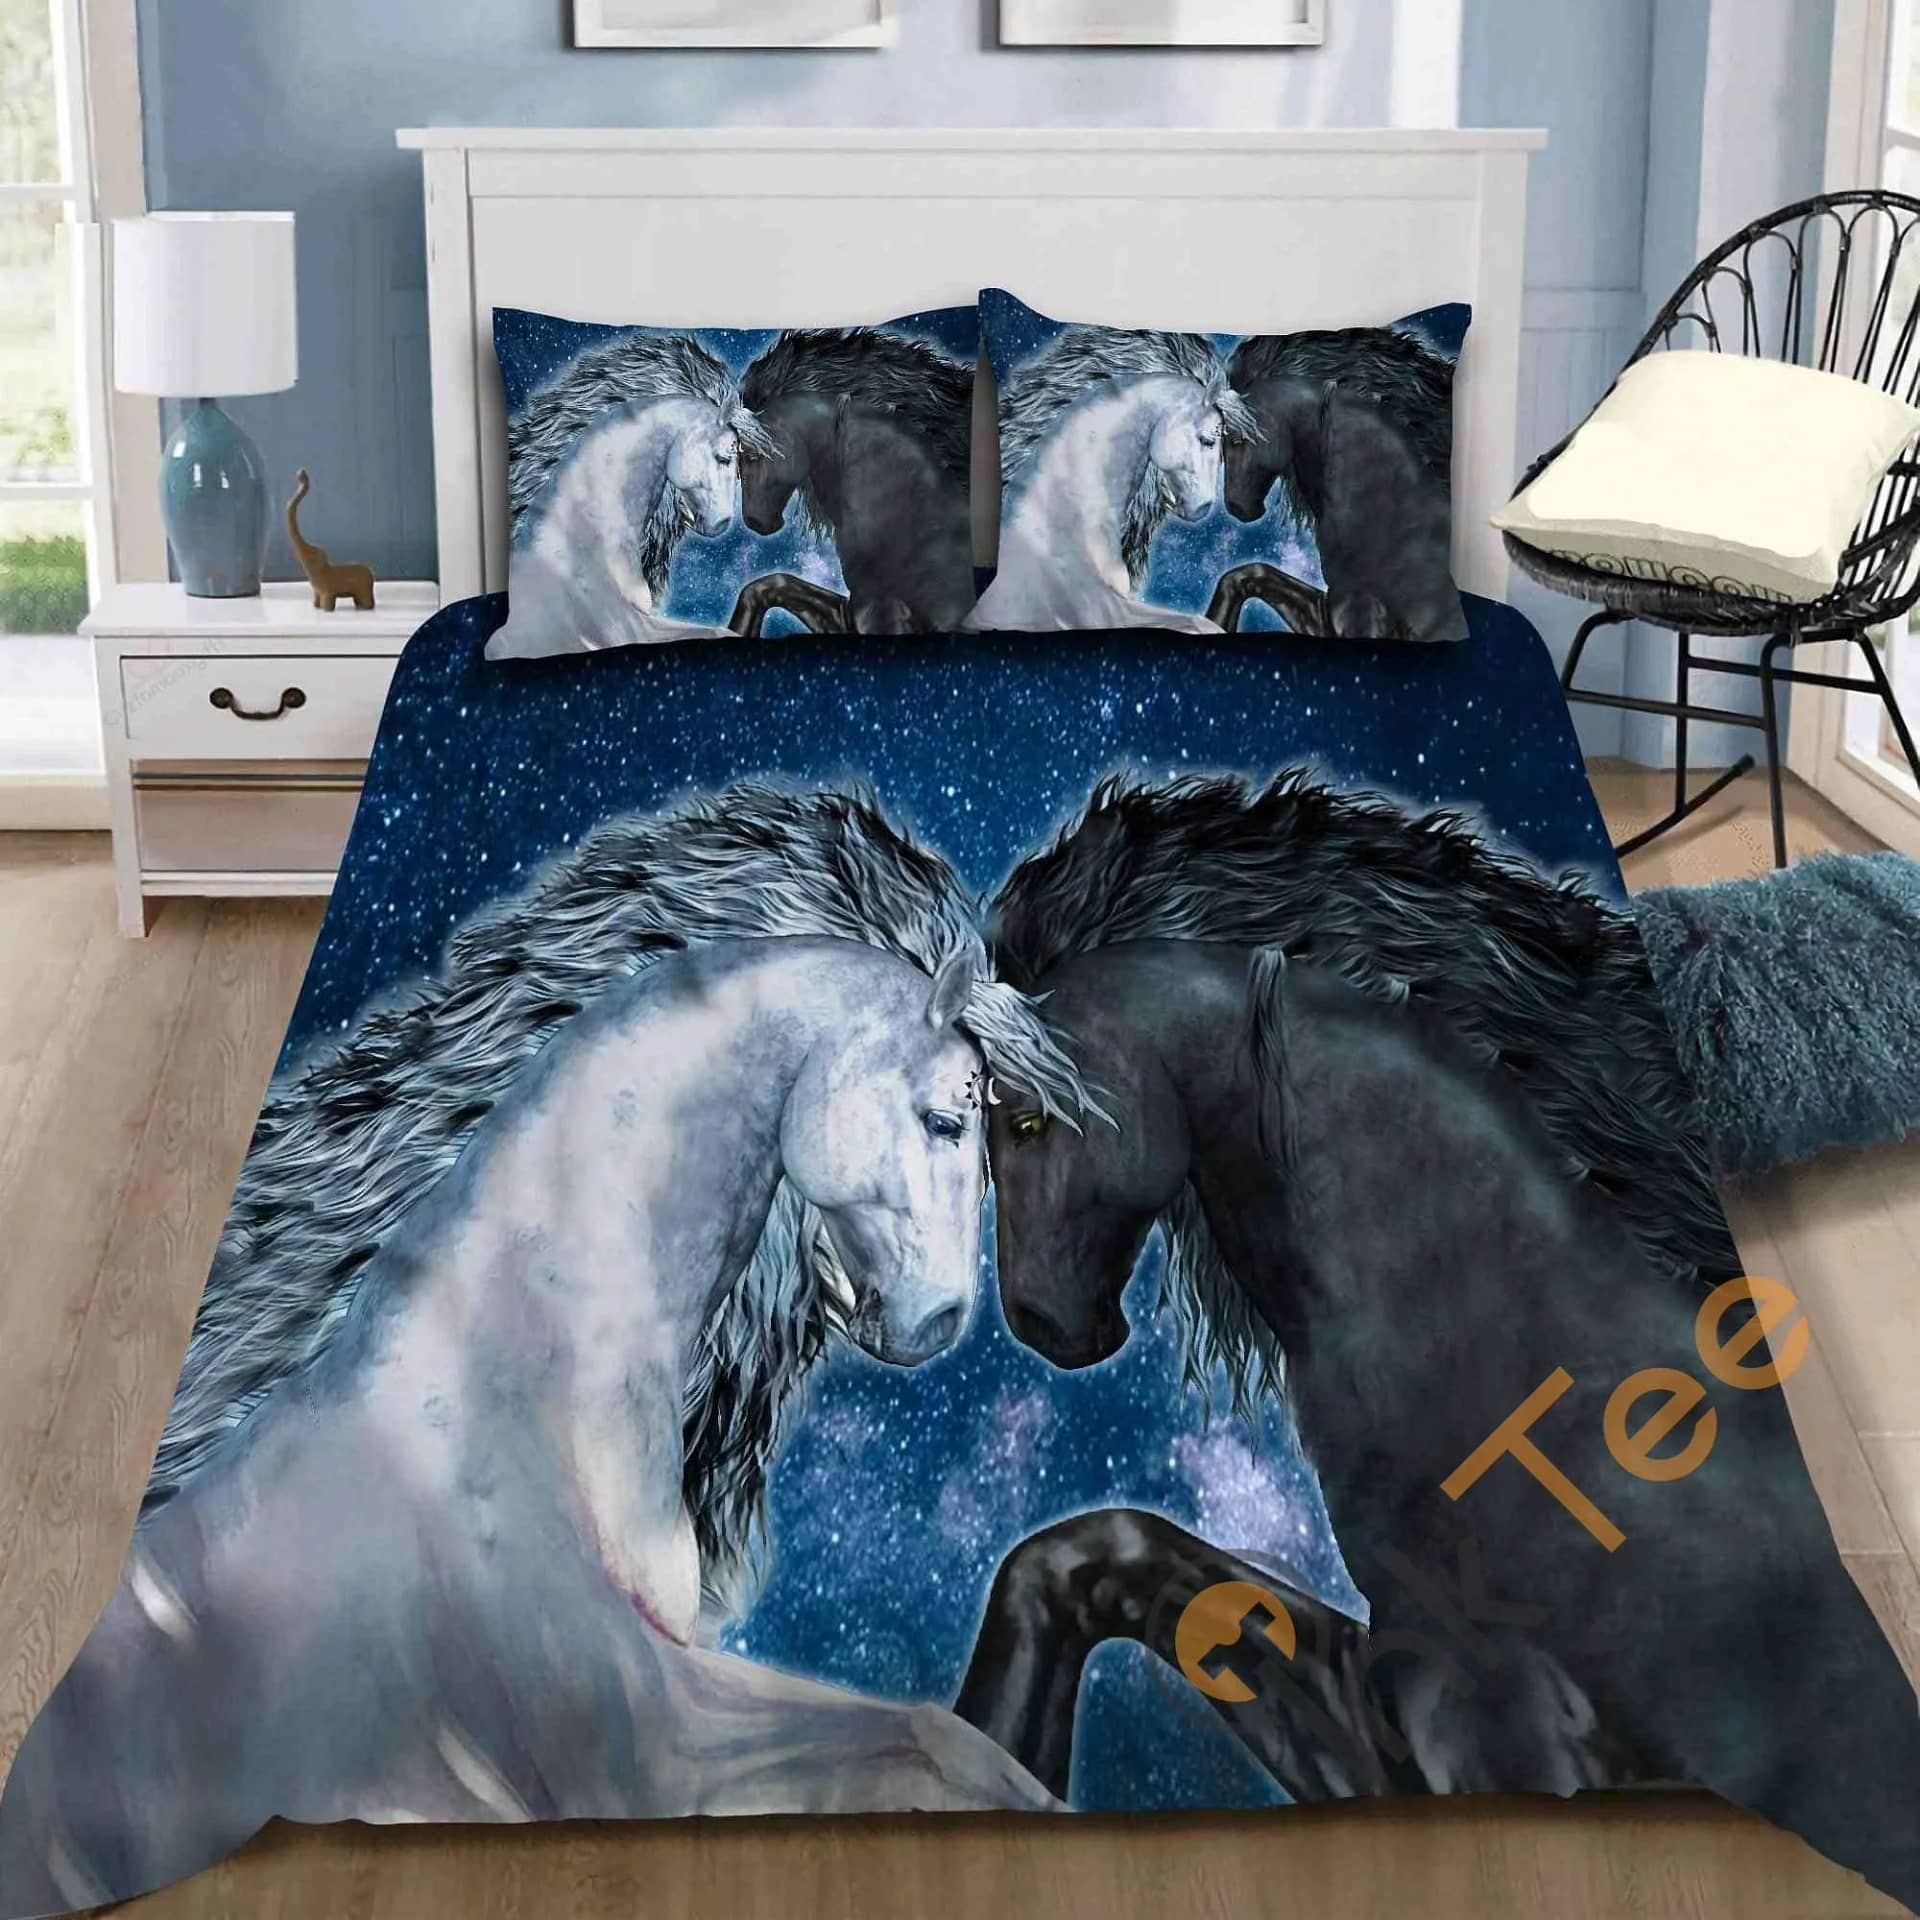 Custom Black Horse And White Horse Quilt Bedding Sets